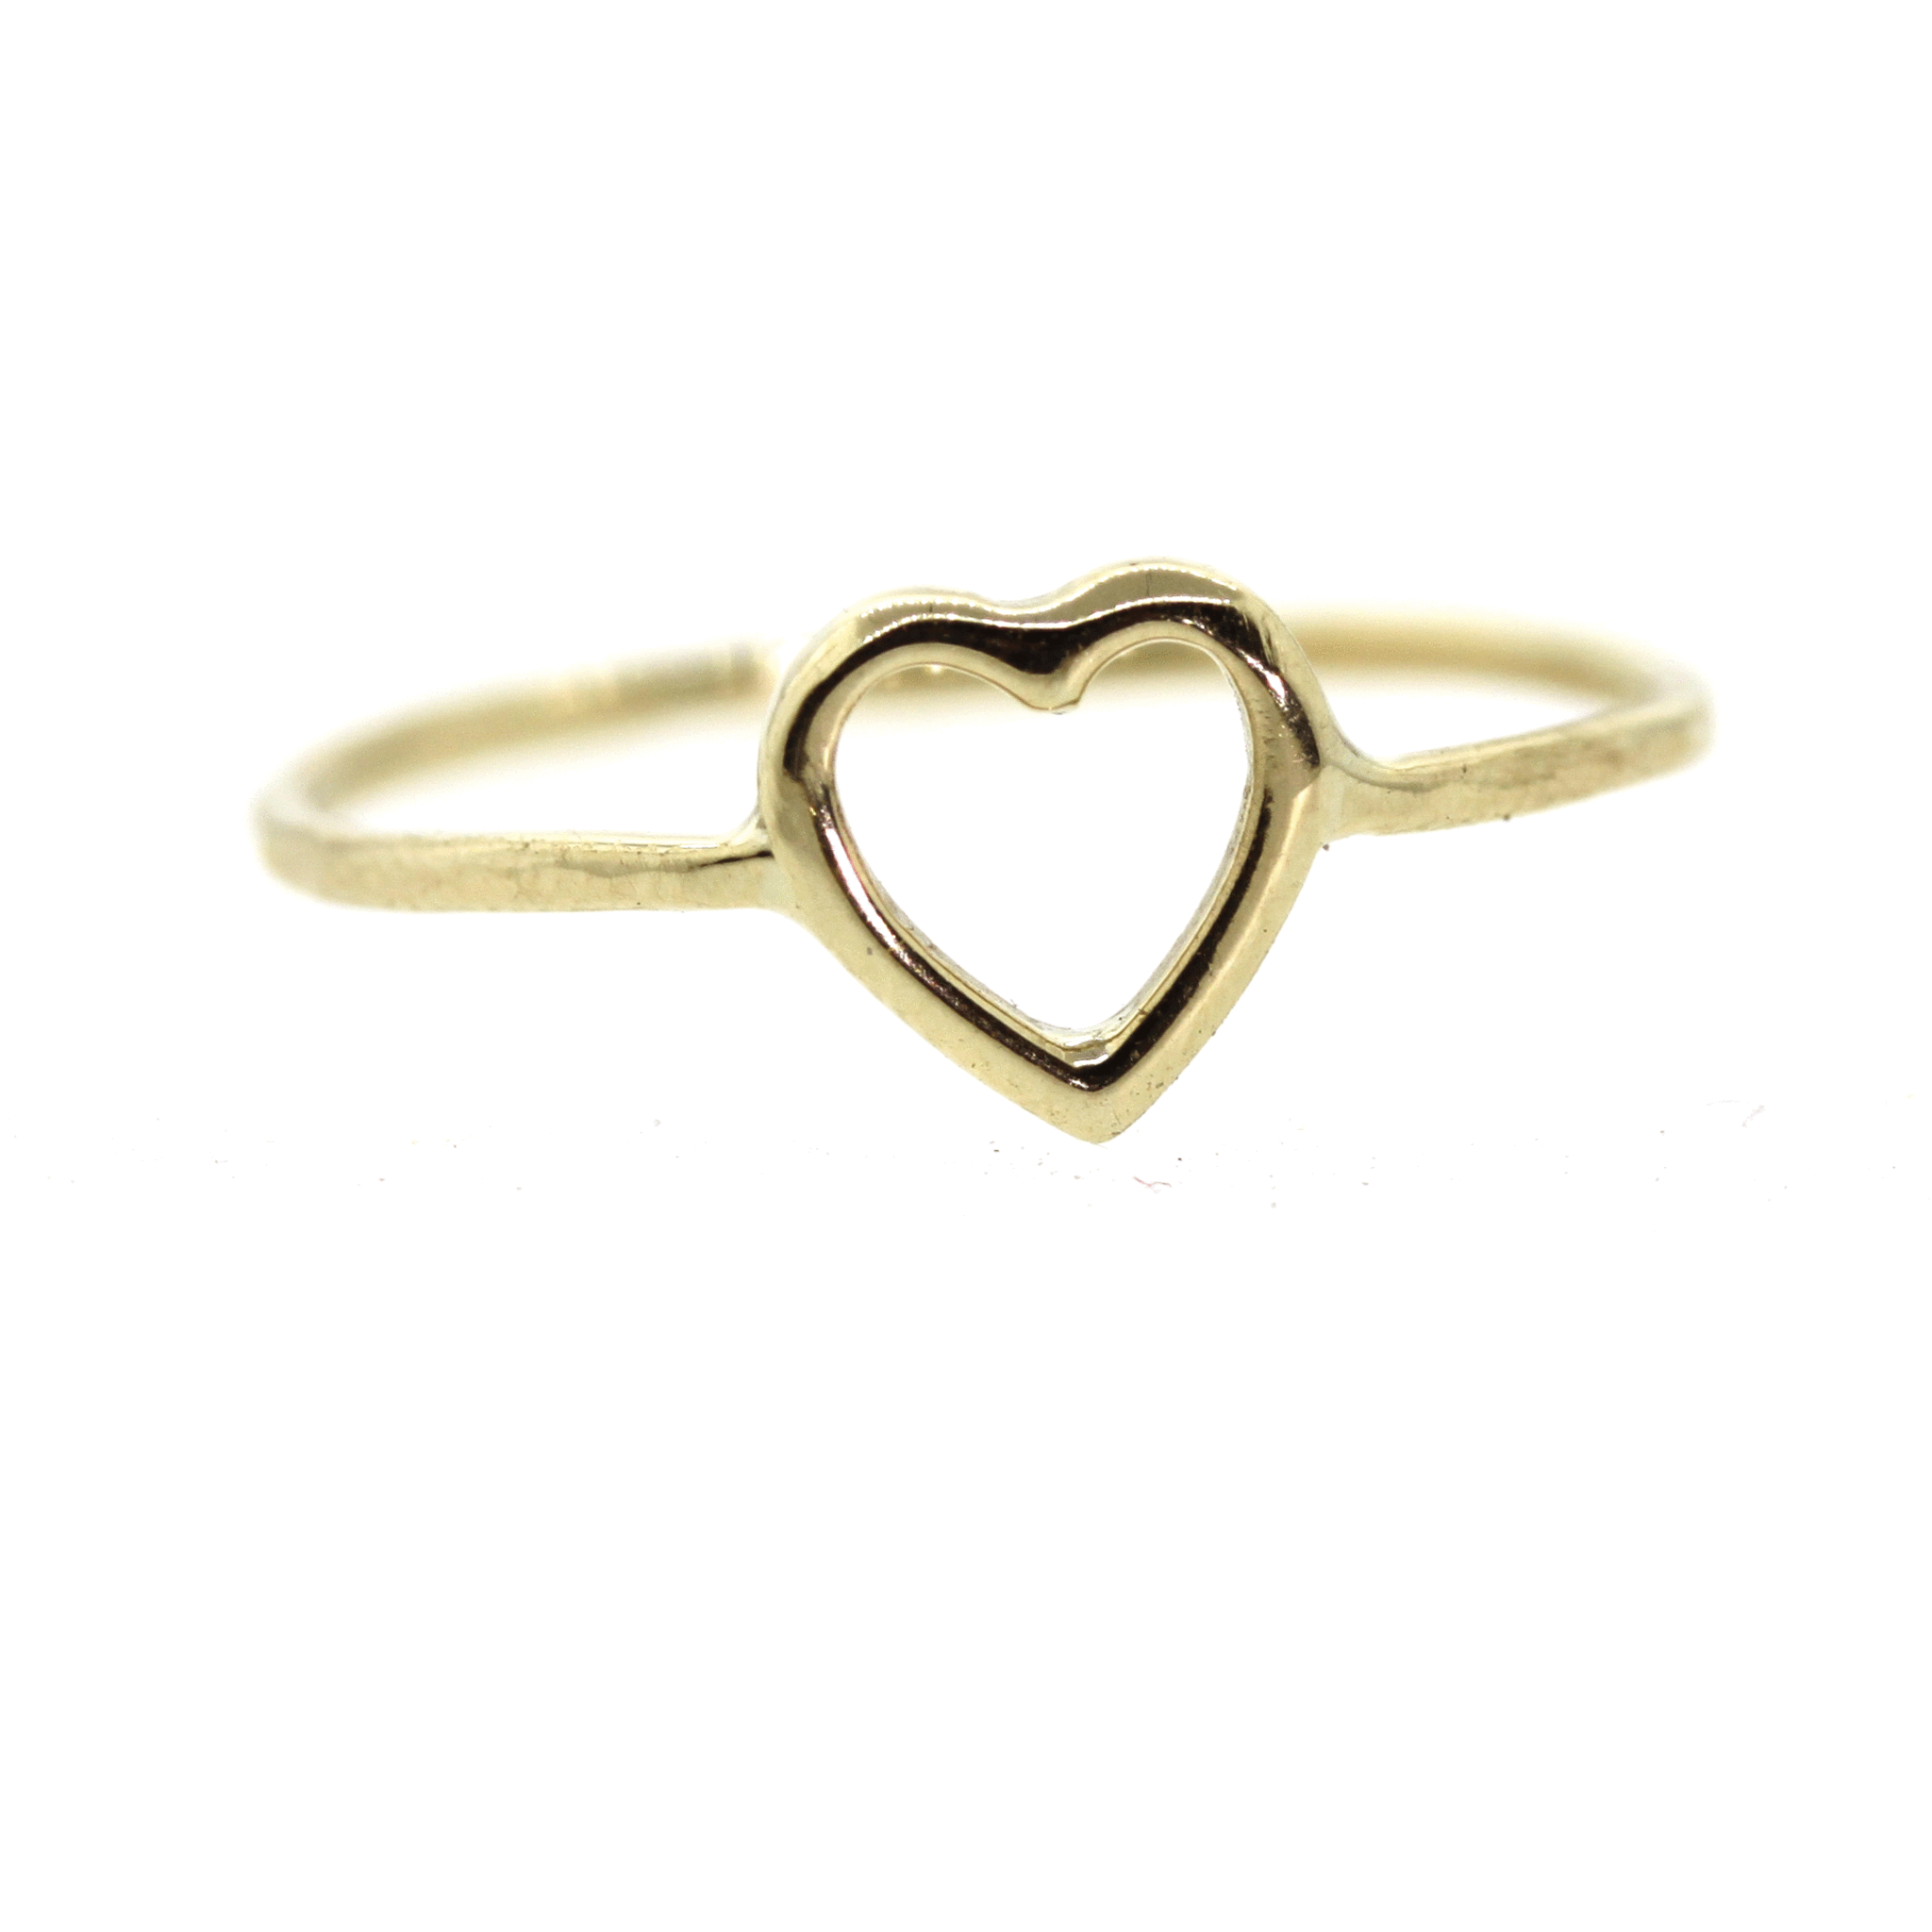 ... yellow gold heart ring - rebecca lankford designs asfuvwa